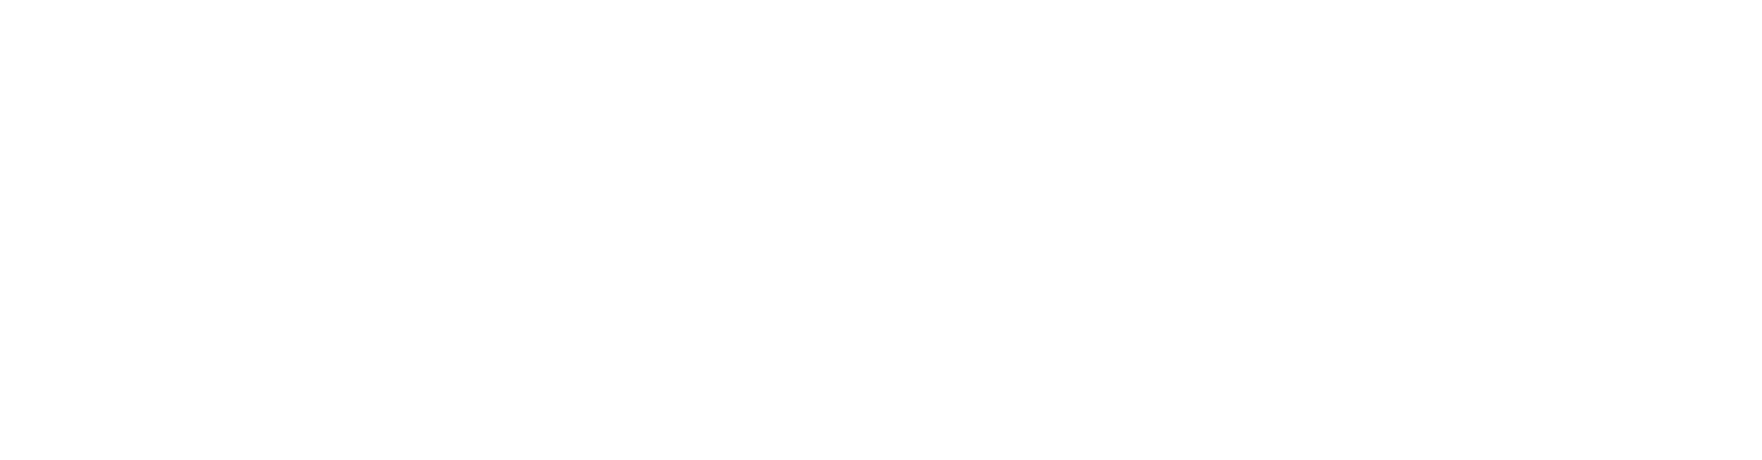 Saunometer logo